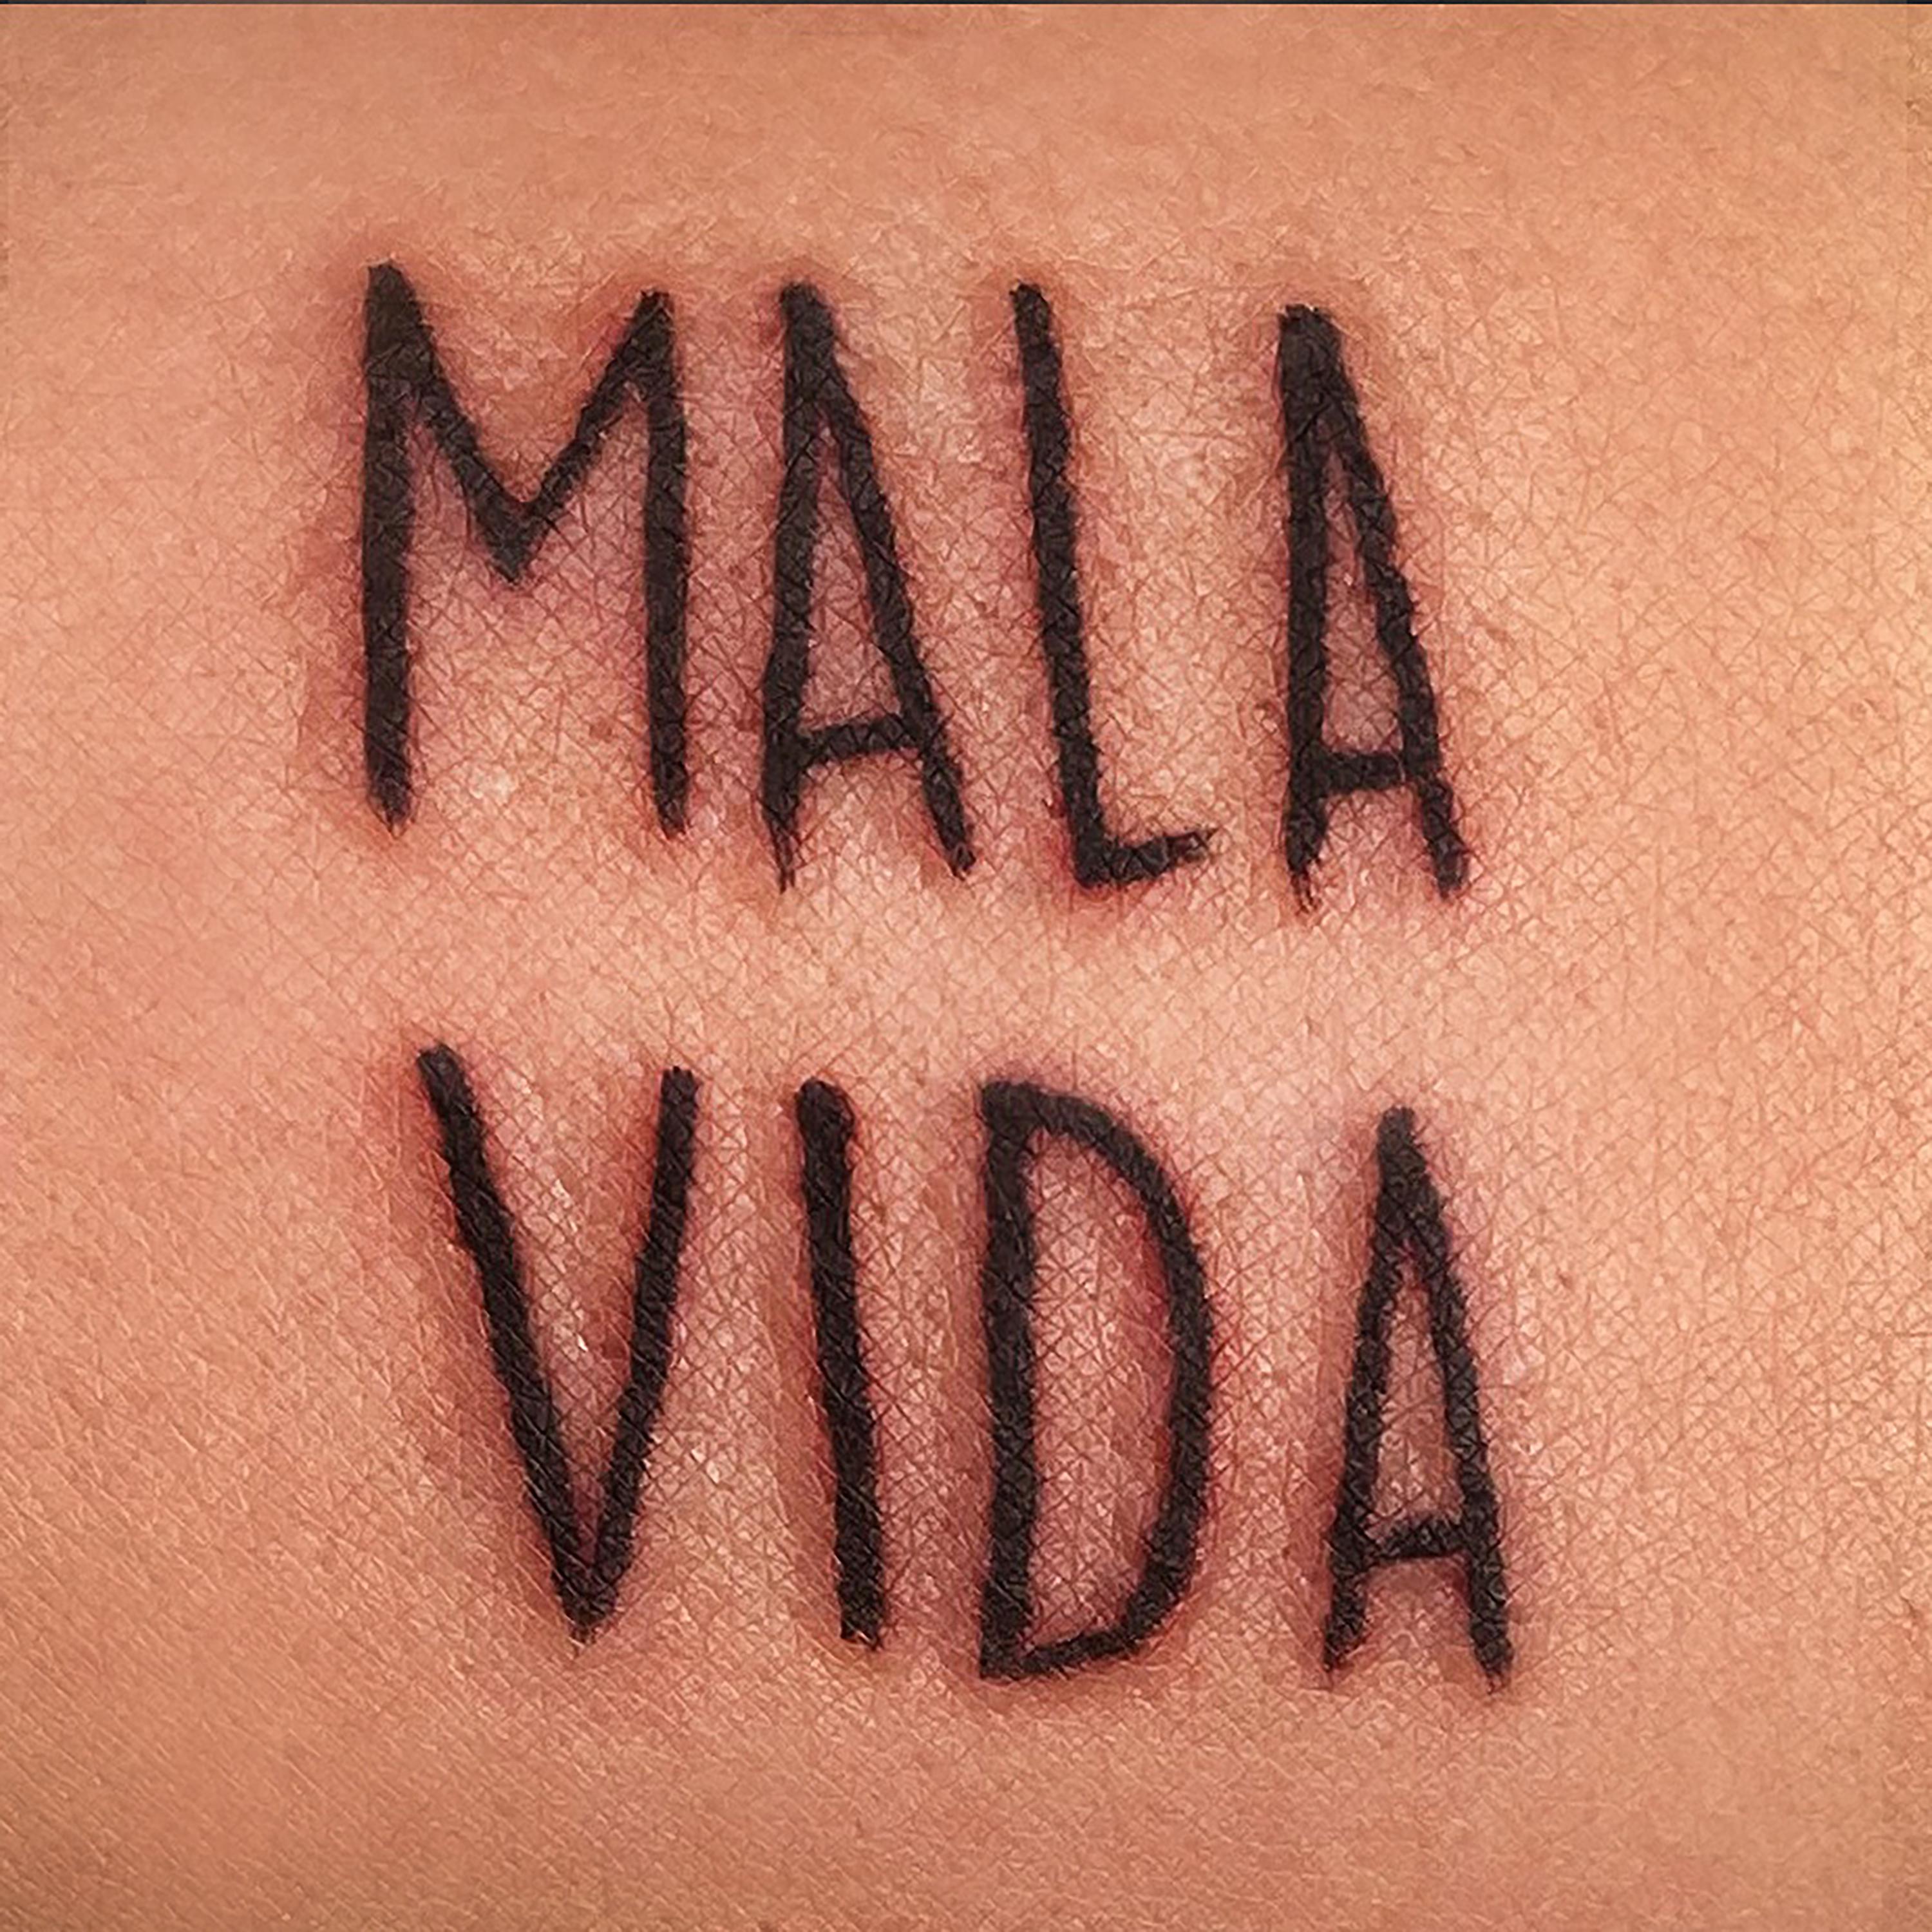 Постер альбома Mala Vida